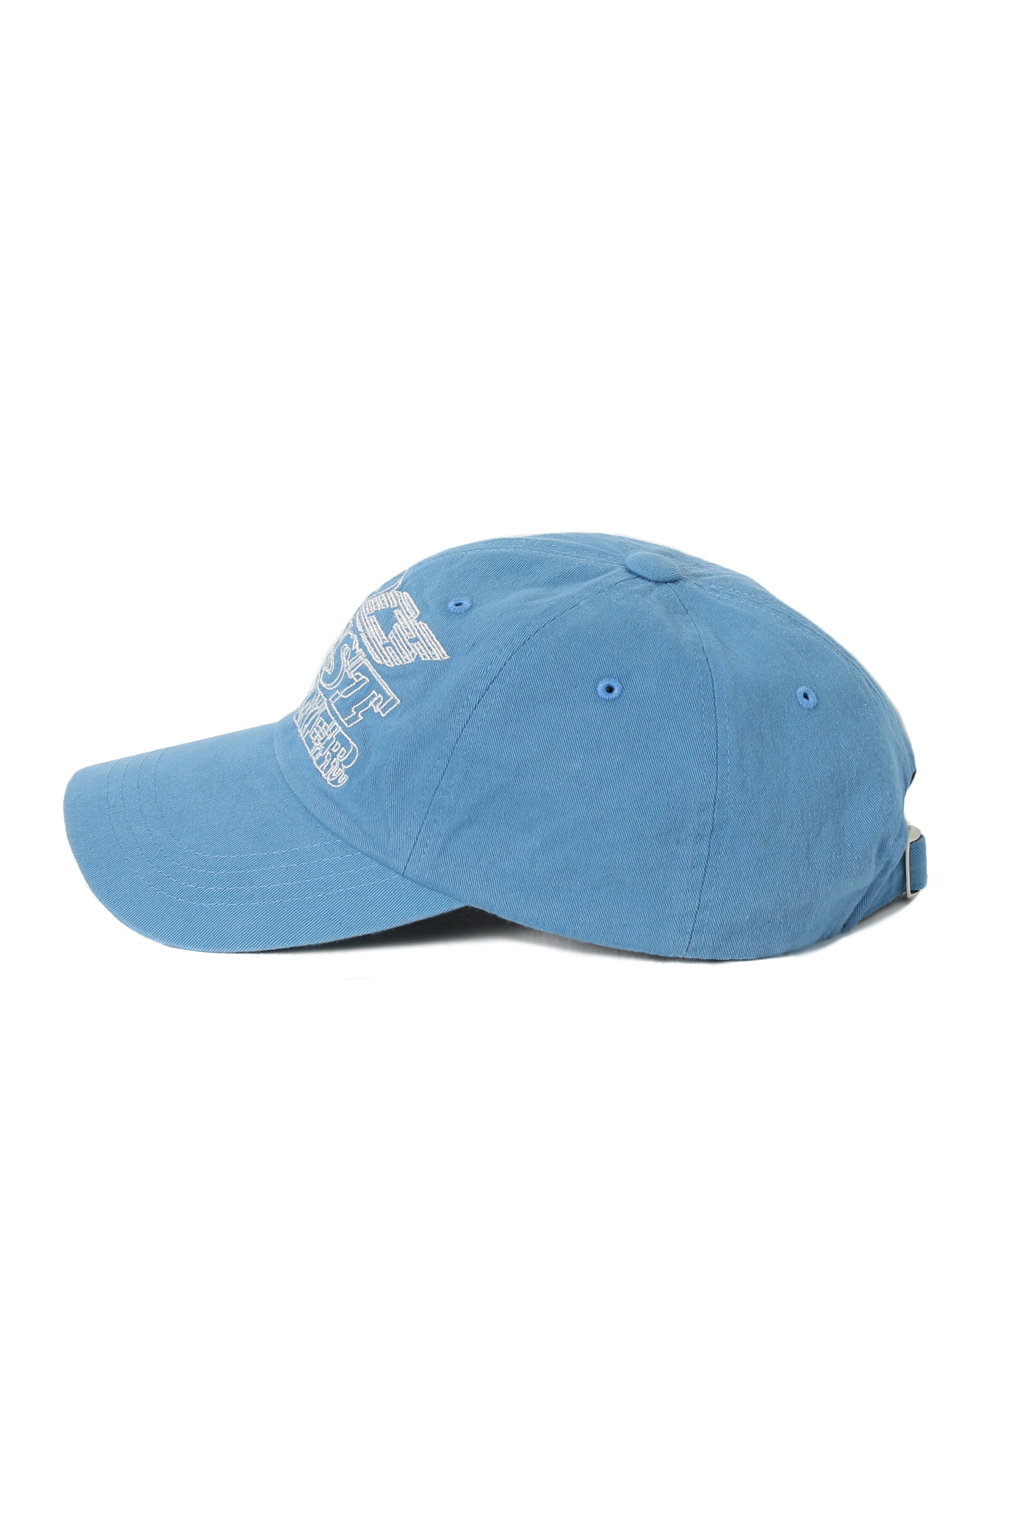 DCS BALL CAP [SKY BLUE]